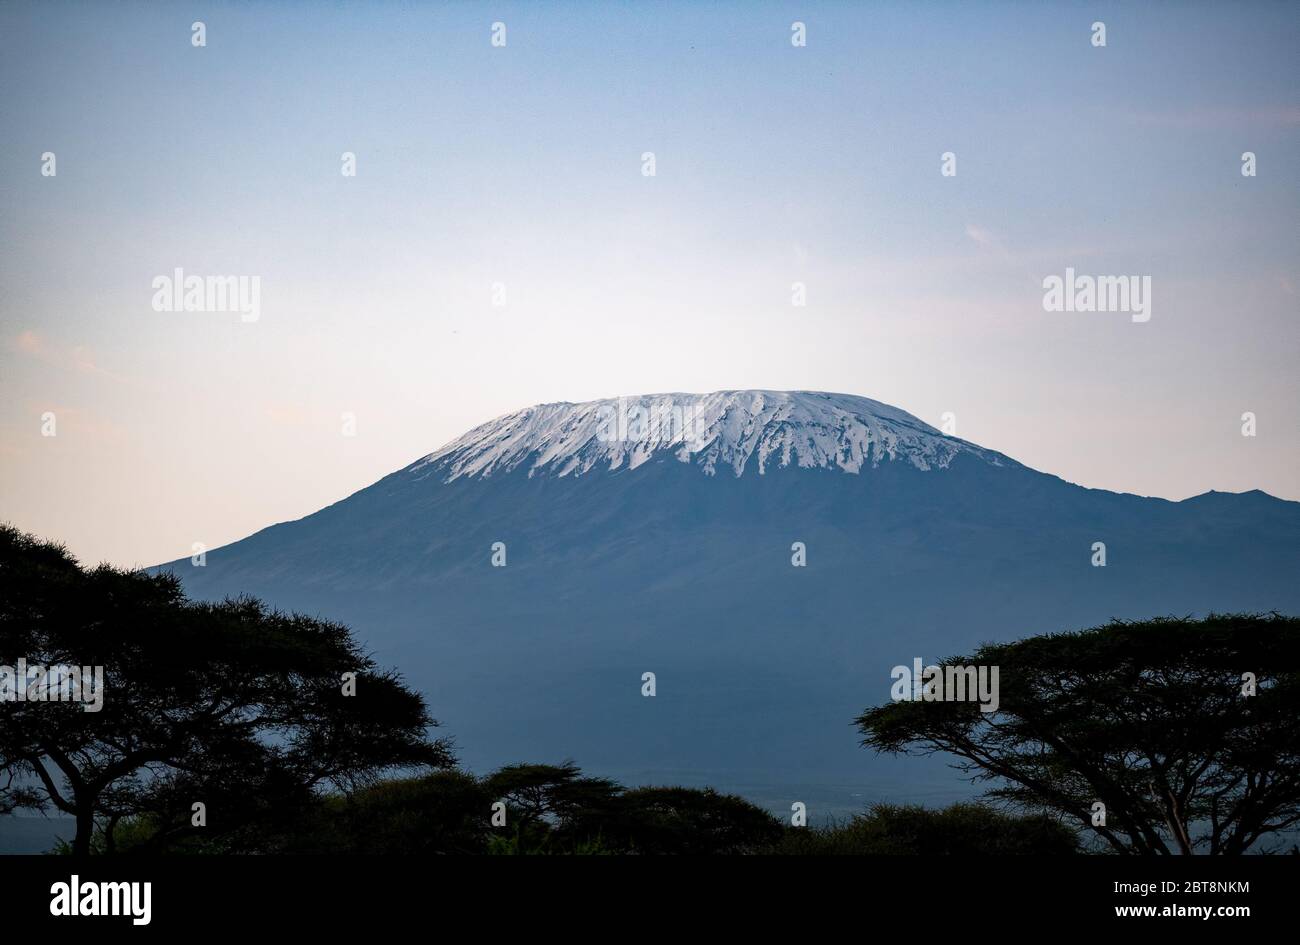 A view of Mount Kilimanjaro from Kibo safari camp at Amboseli national park. Mount Kilimanjaro is a dormant volcano in Tanzania Stock Photo